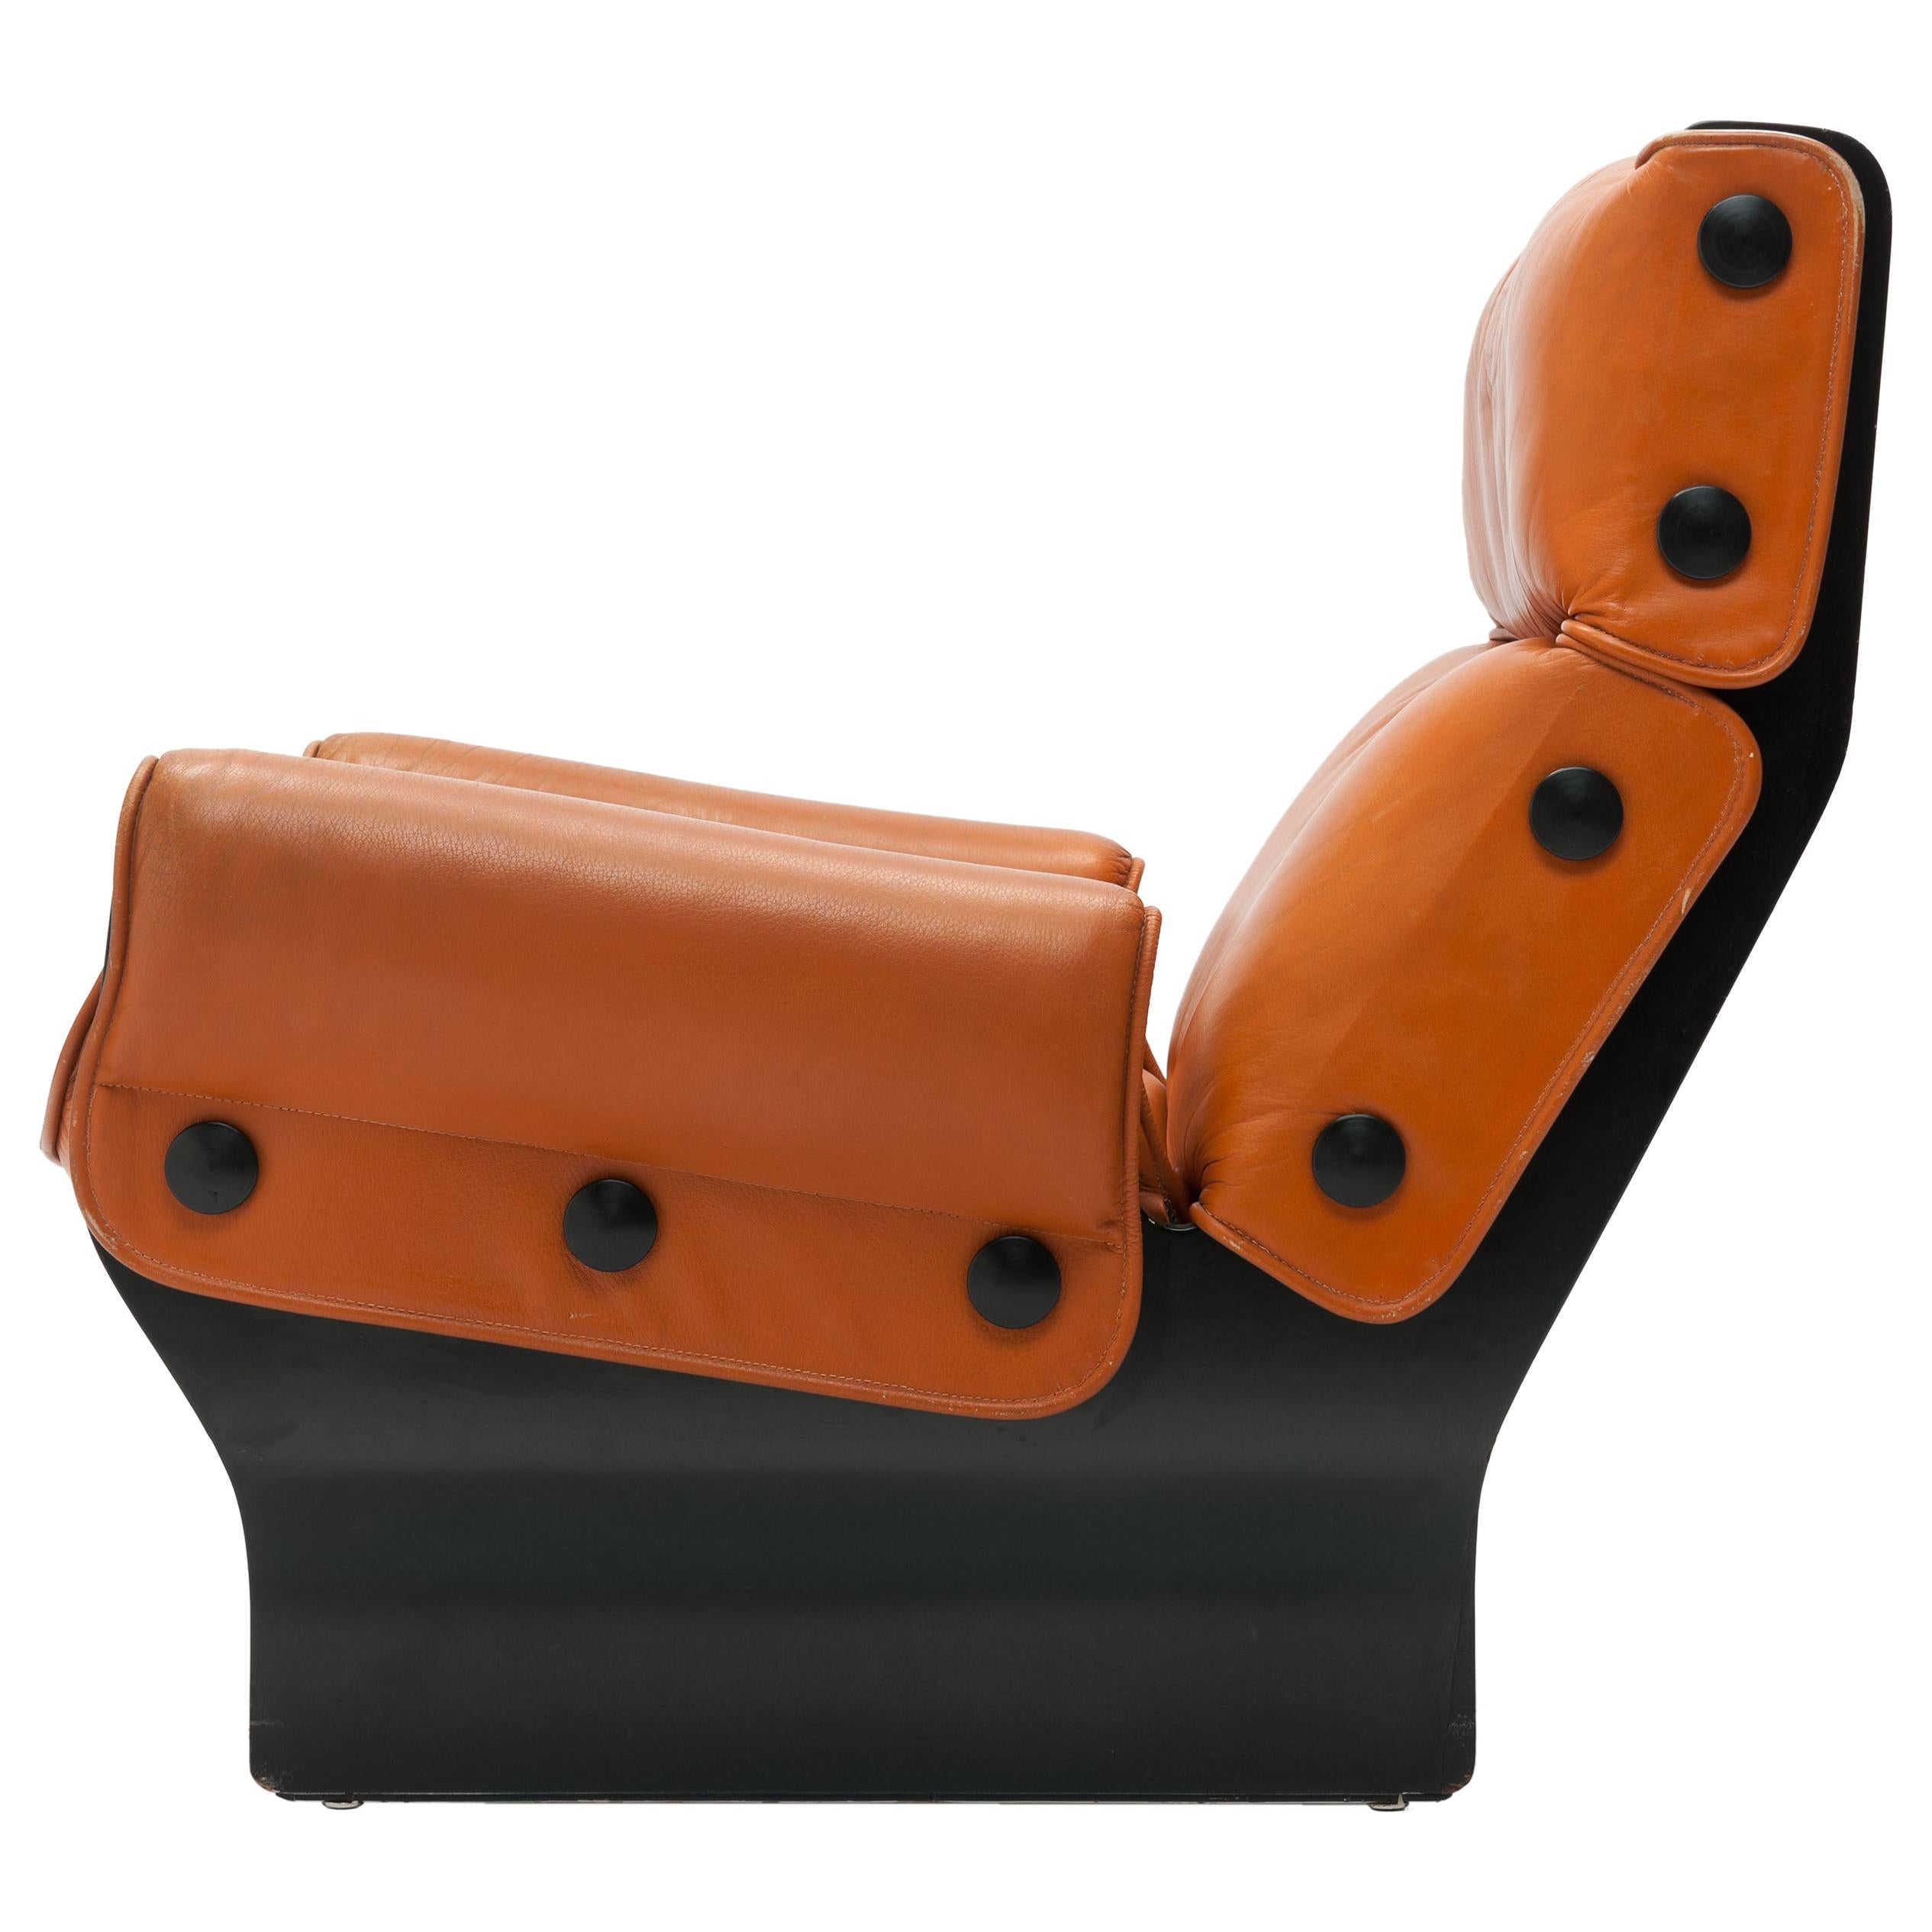 Osvaldo Borsani 'Canada' Lounge Chair by Tecno in Original Leather